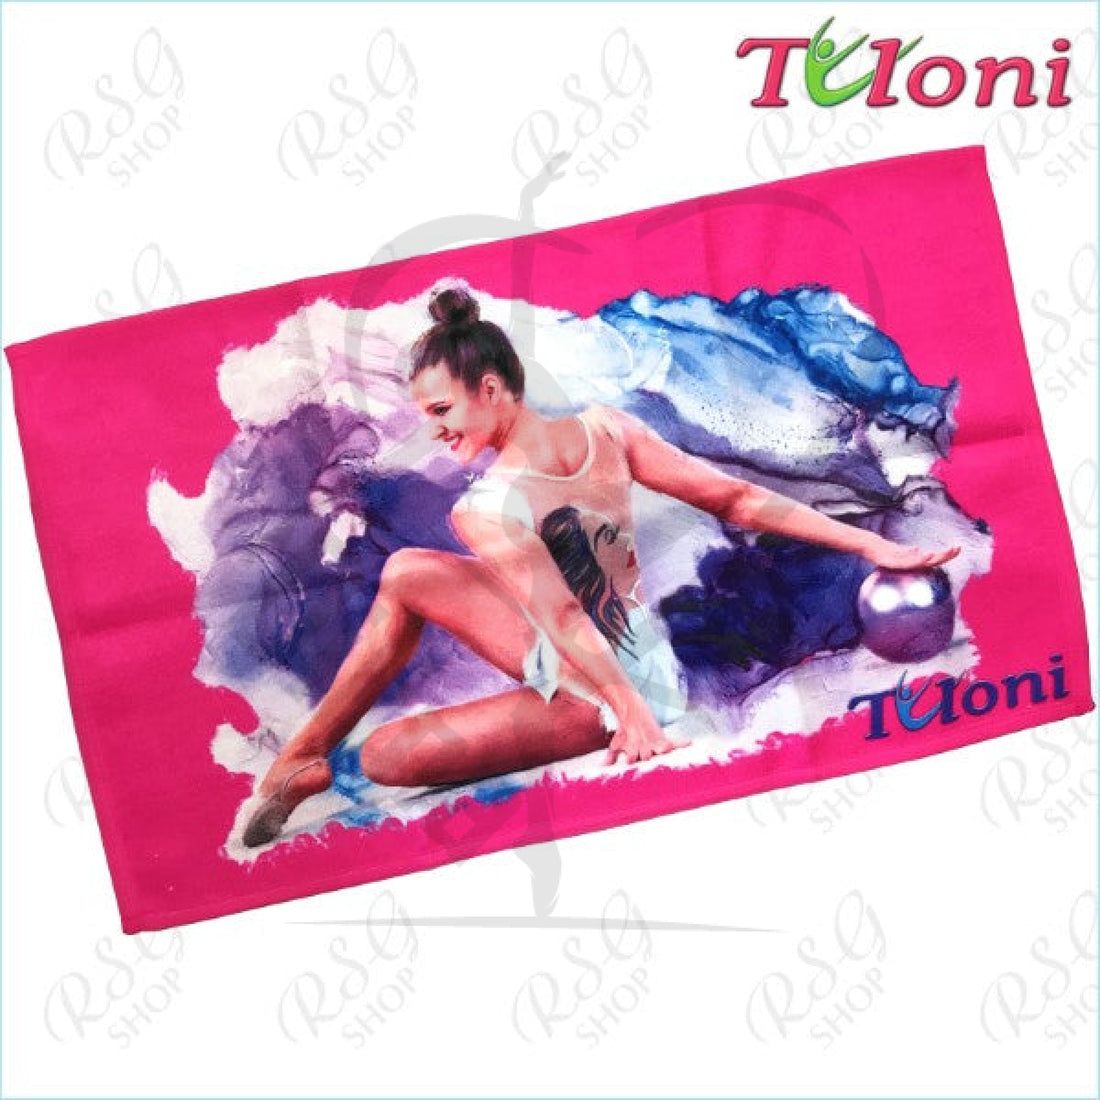 Tuloni Hand Towel Fuchsia Accessories